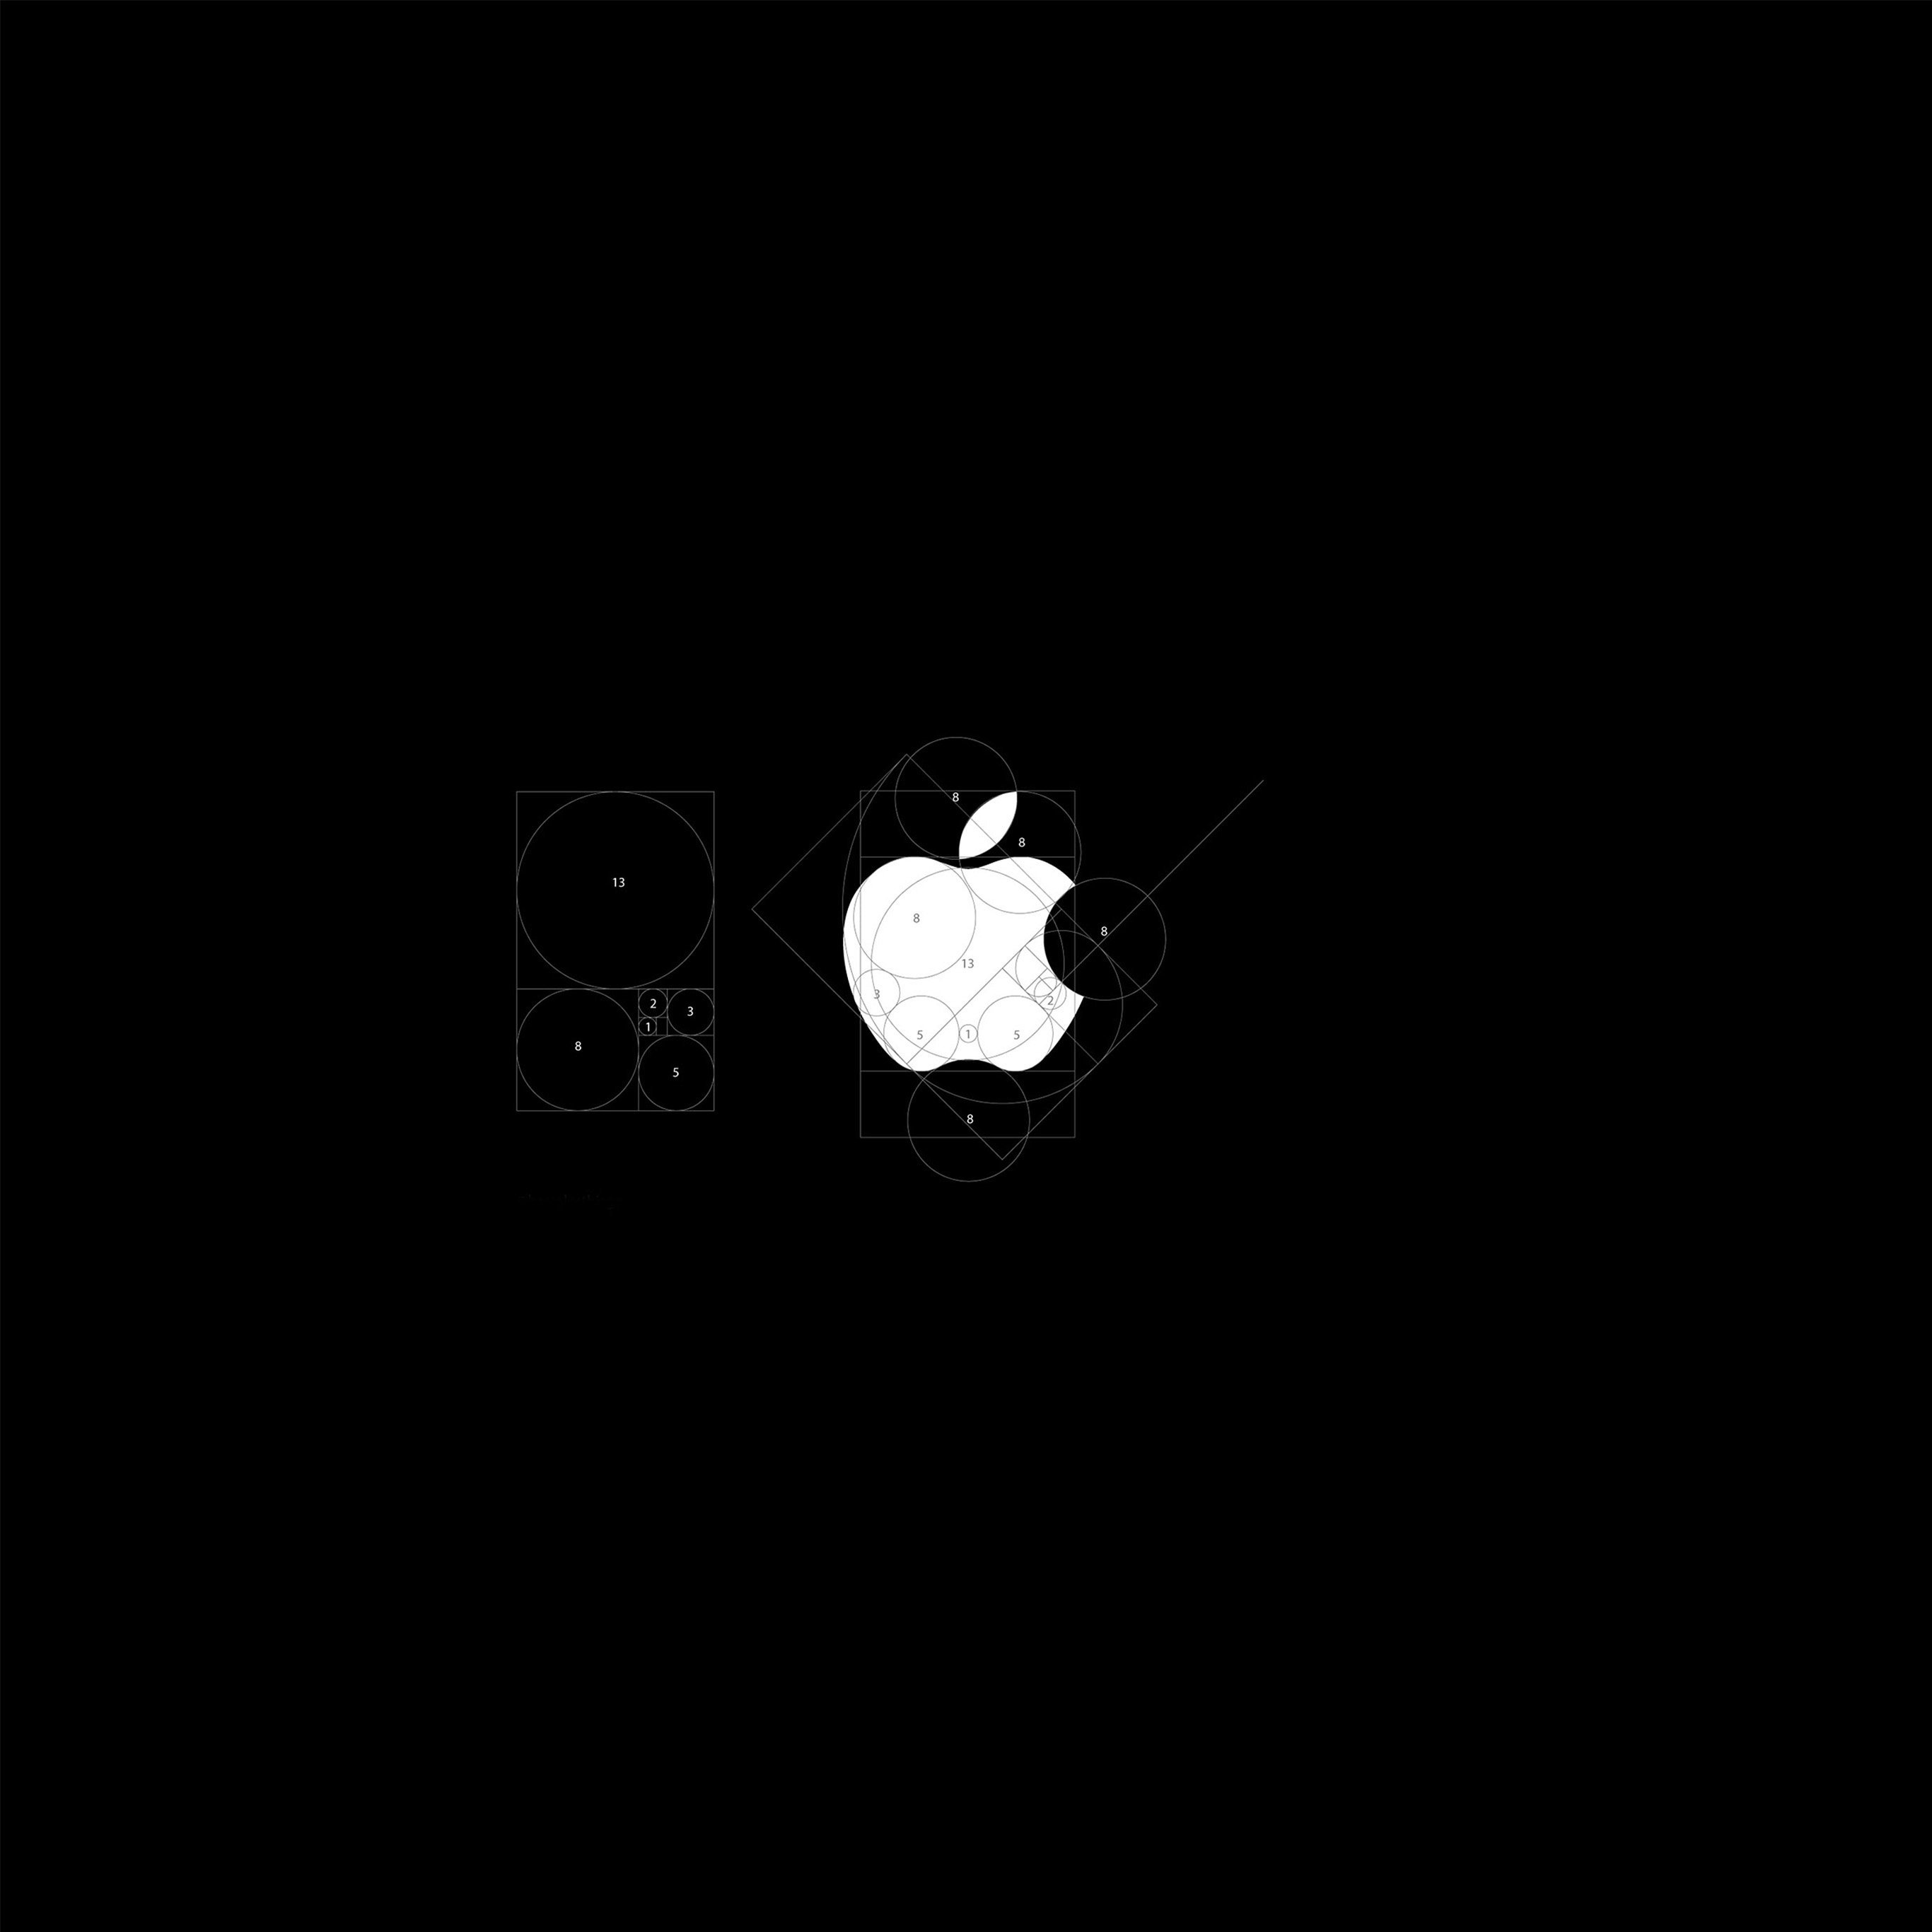 Часы значок айфона. Apple на черном фоне. Логотип Apple на черном фоне. Яблоко айфона на черном фоне. Яблочко на черном фоне.